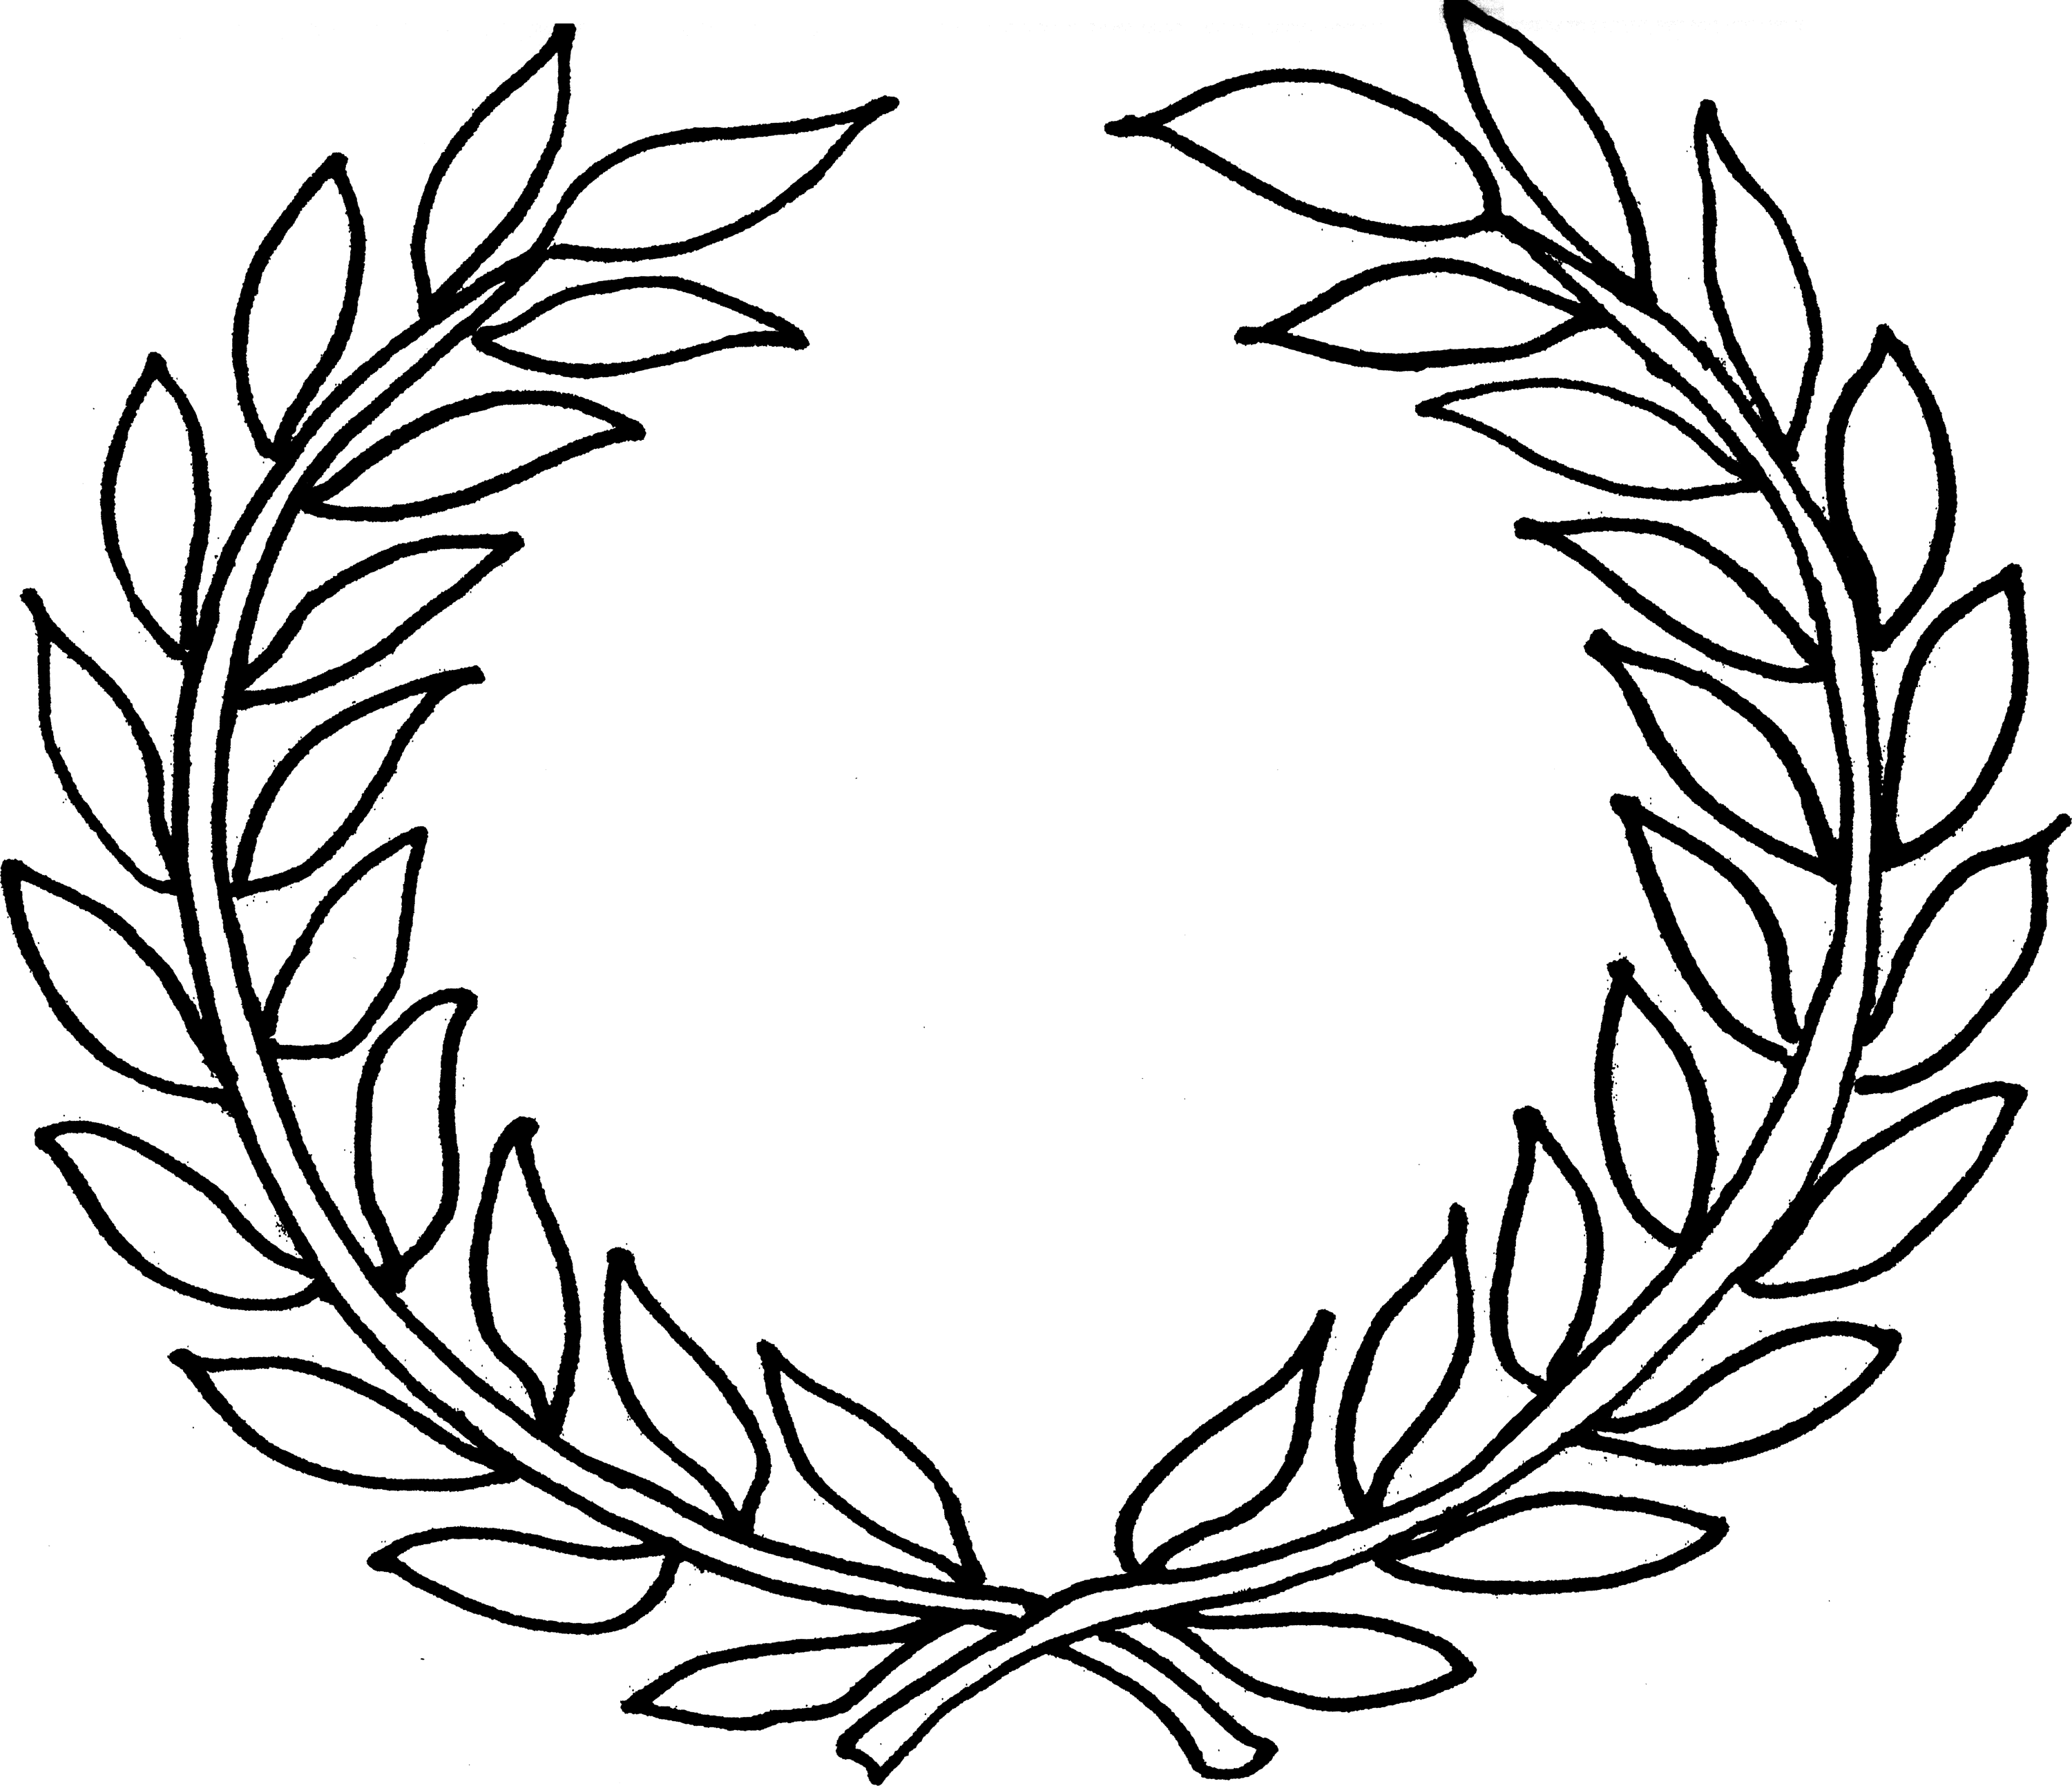 Olive wreath olympics clipart 